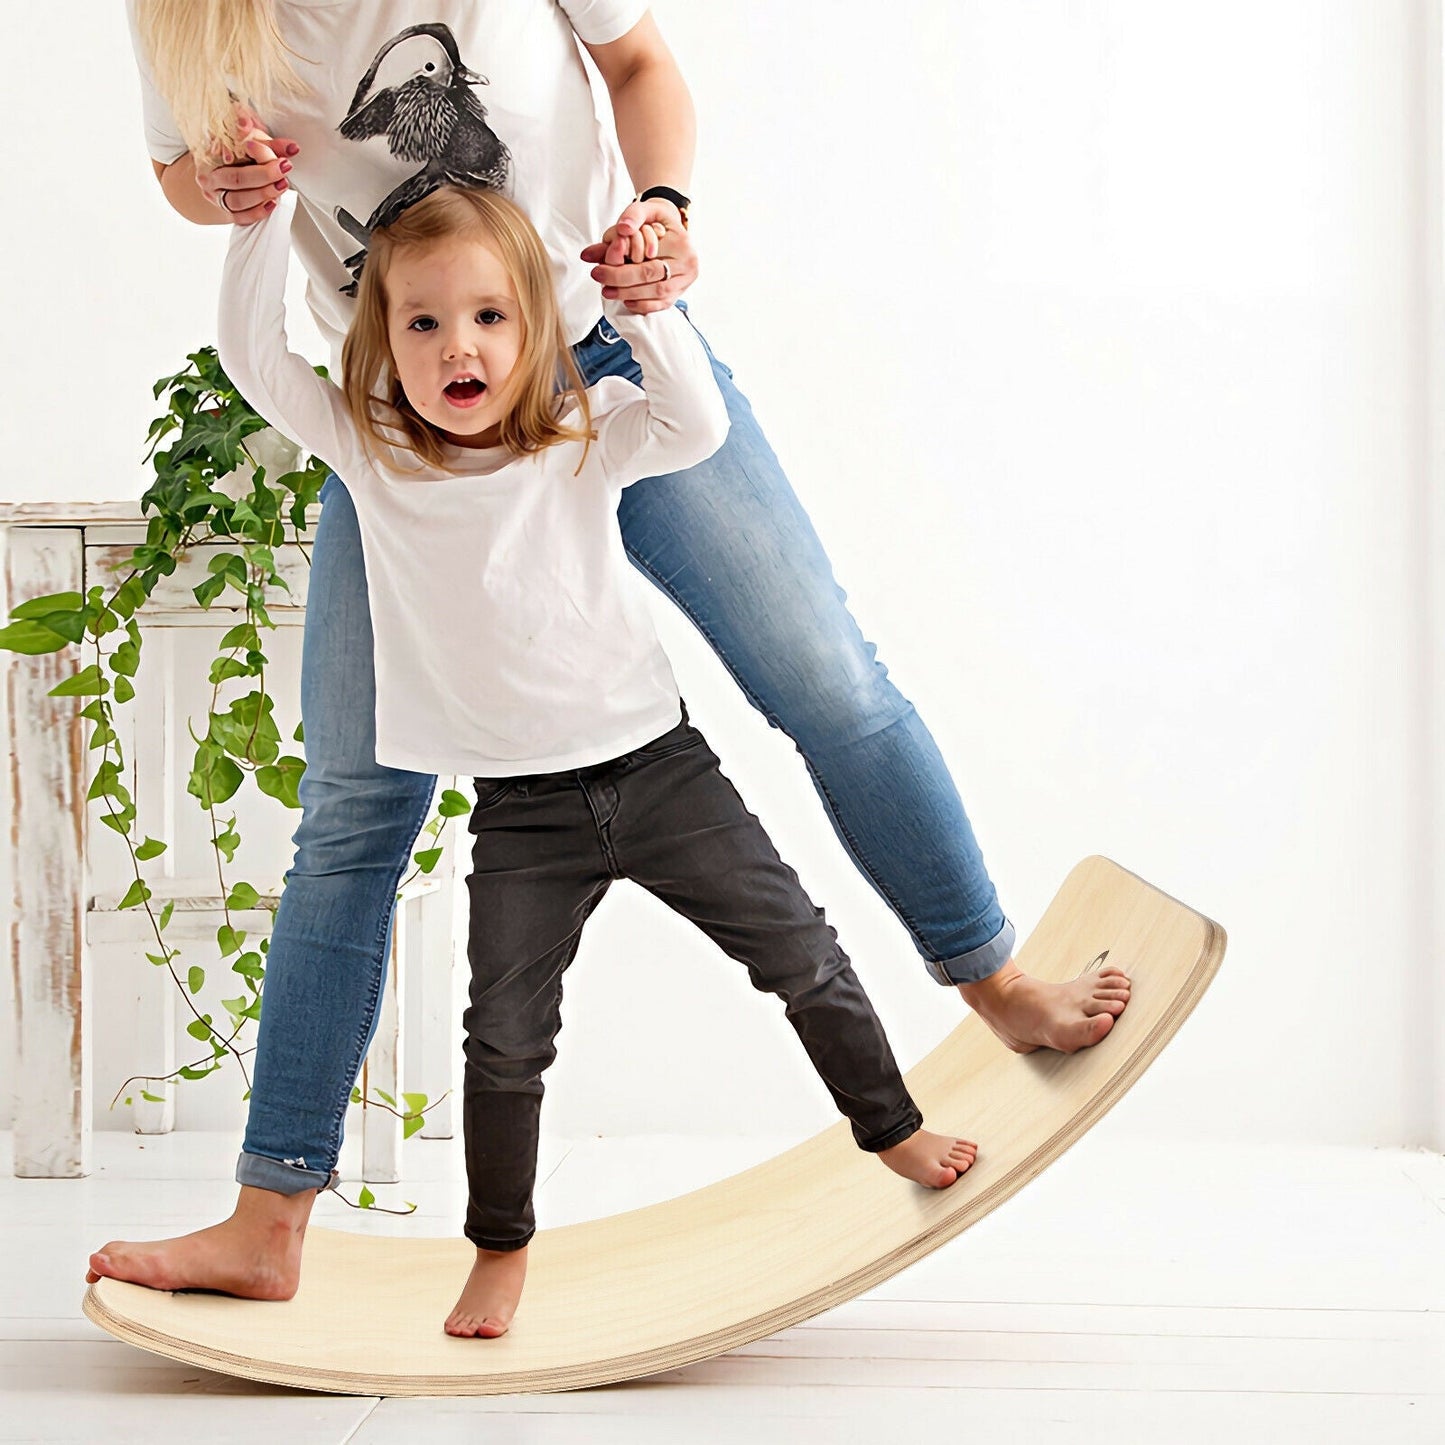 35 Inch Wooden Wobble Balance Board Kids Rocker Yoga Curvy Board Toy with Felt Layer at Gallery Canada